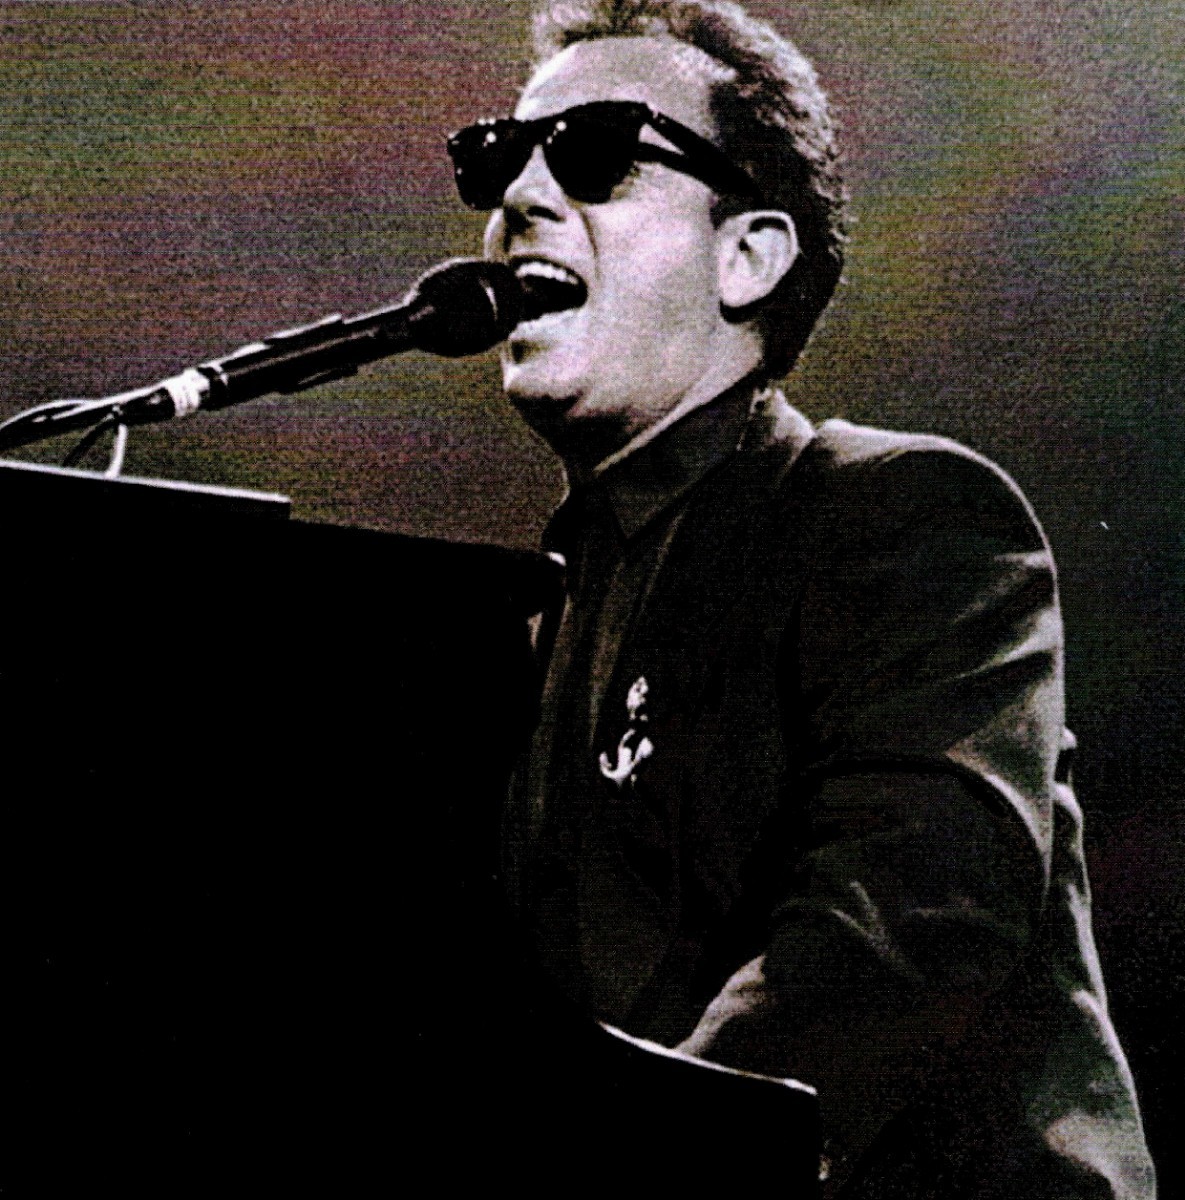 Billy Joel 「Nassau Coliseum Soundcheck - Storm Front Tour -」 ビリー・ジョエル CD _画像6